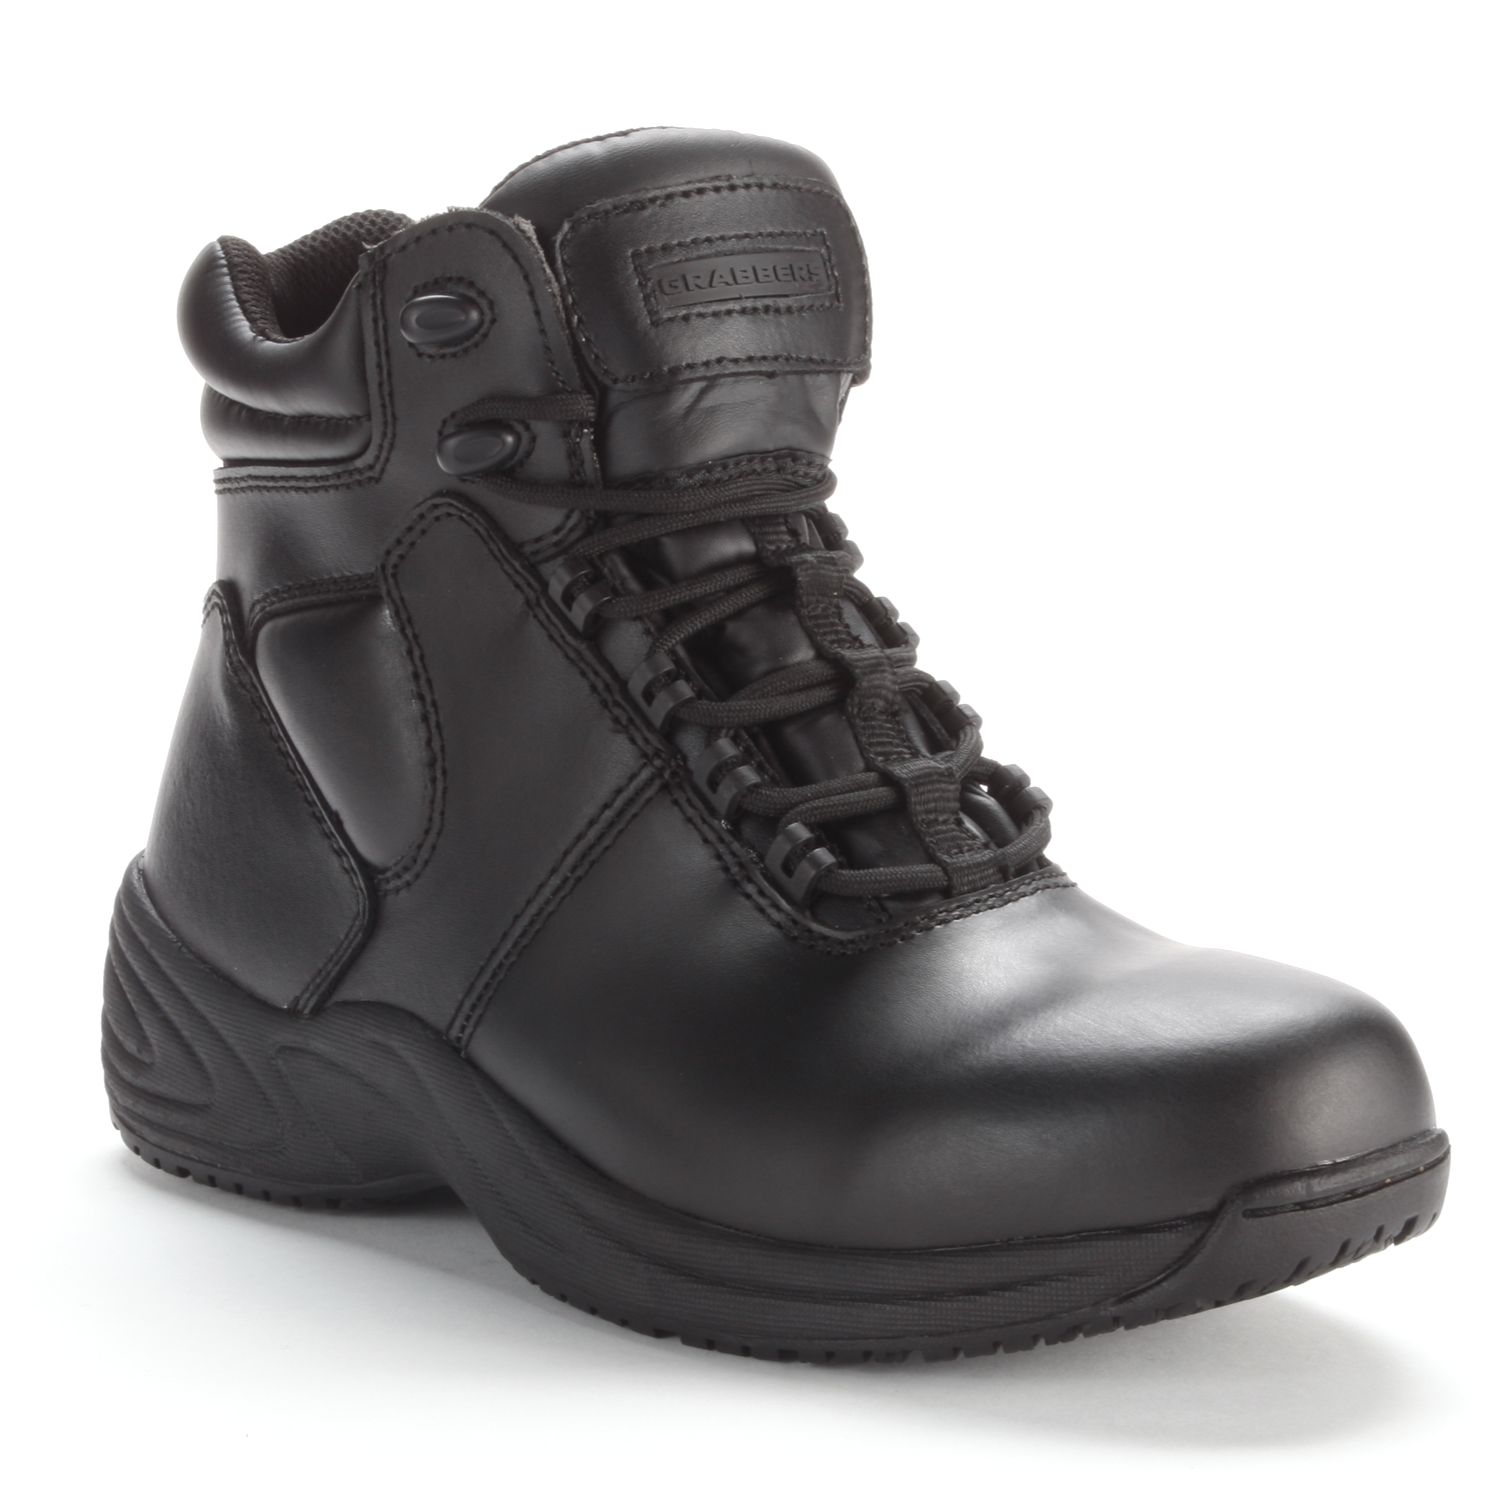 slip resistant boots mens